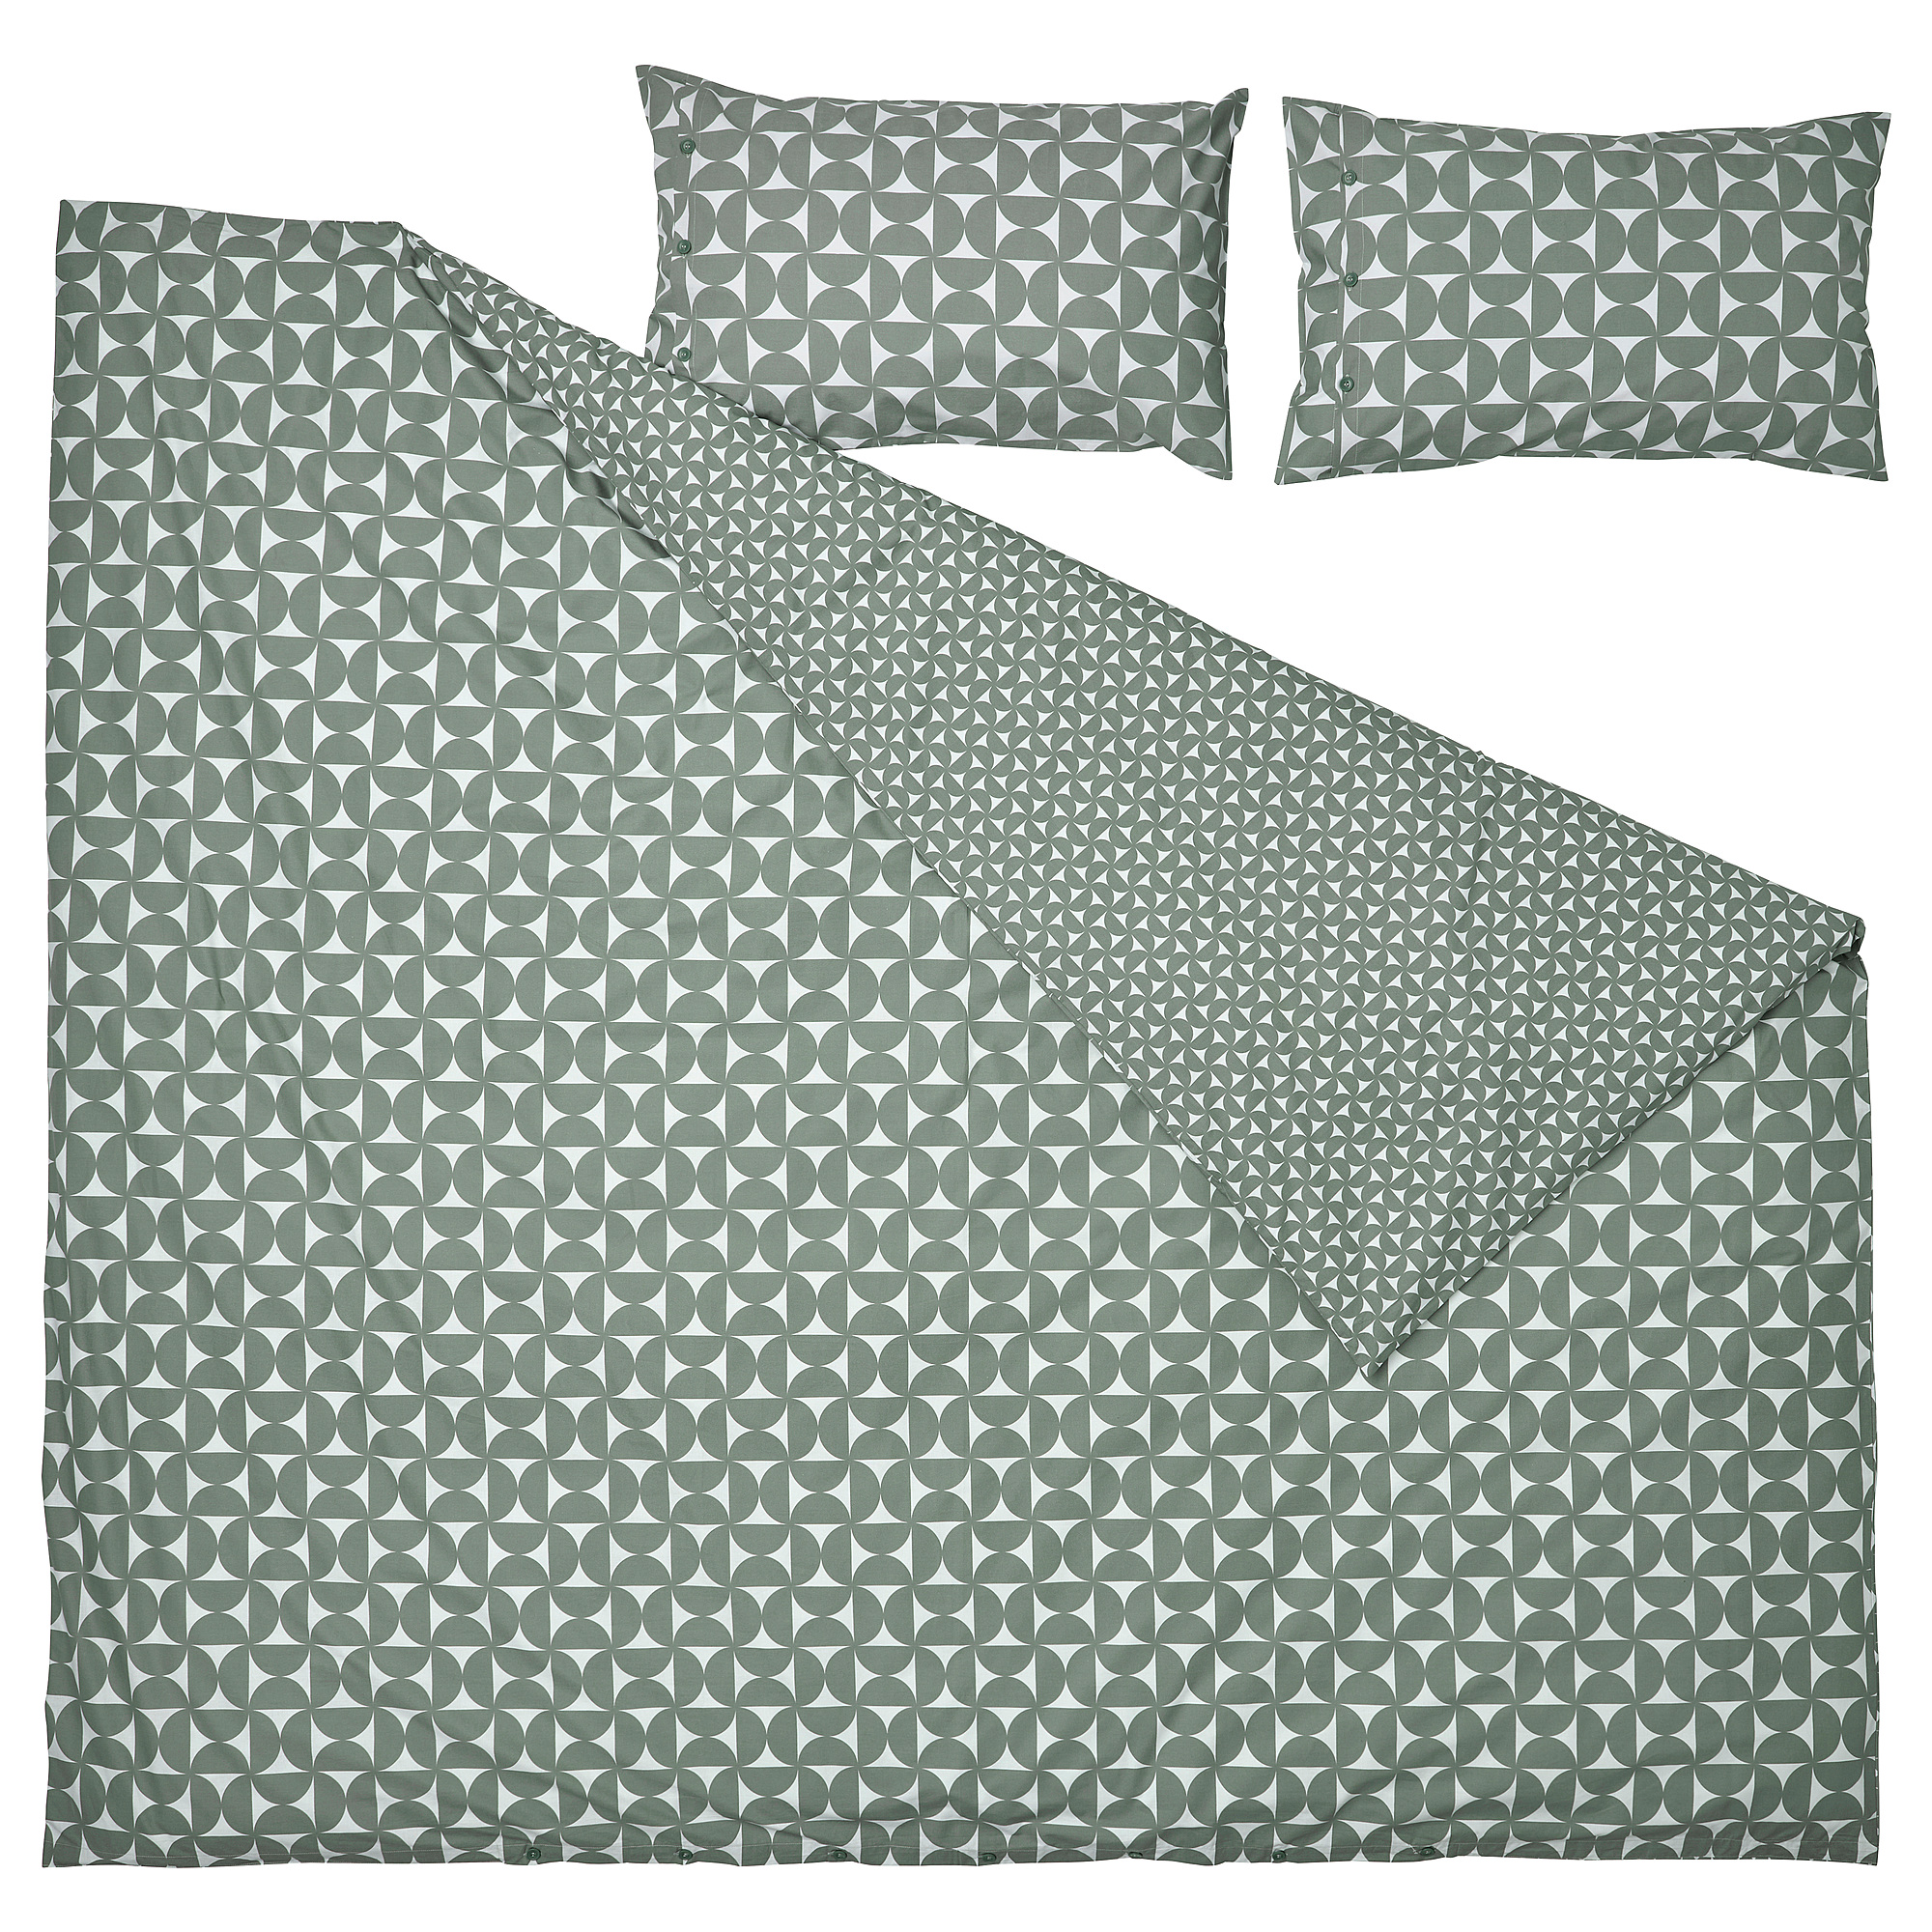 ÄNGSNEJLIKA duvet cover and 2 pillowcases